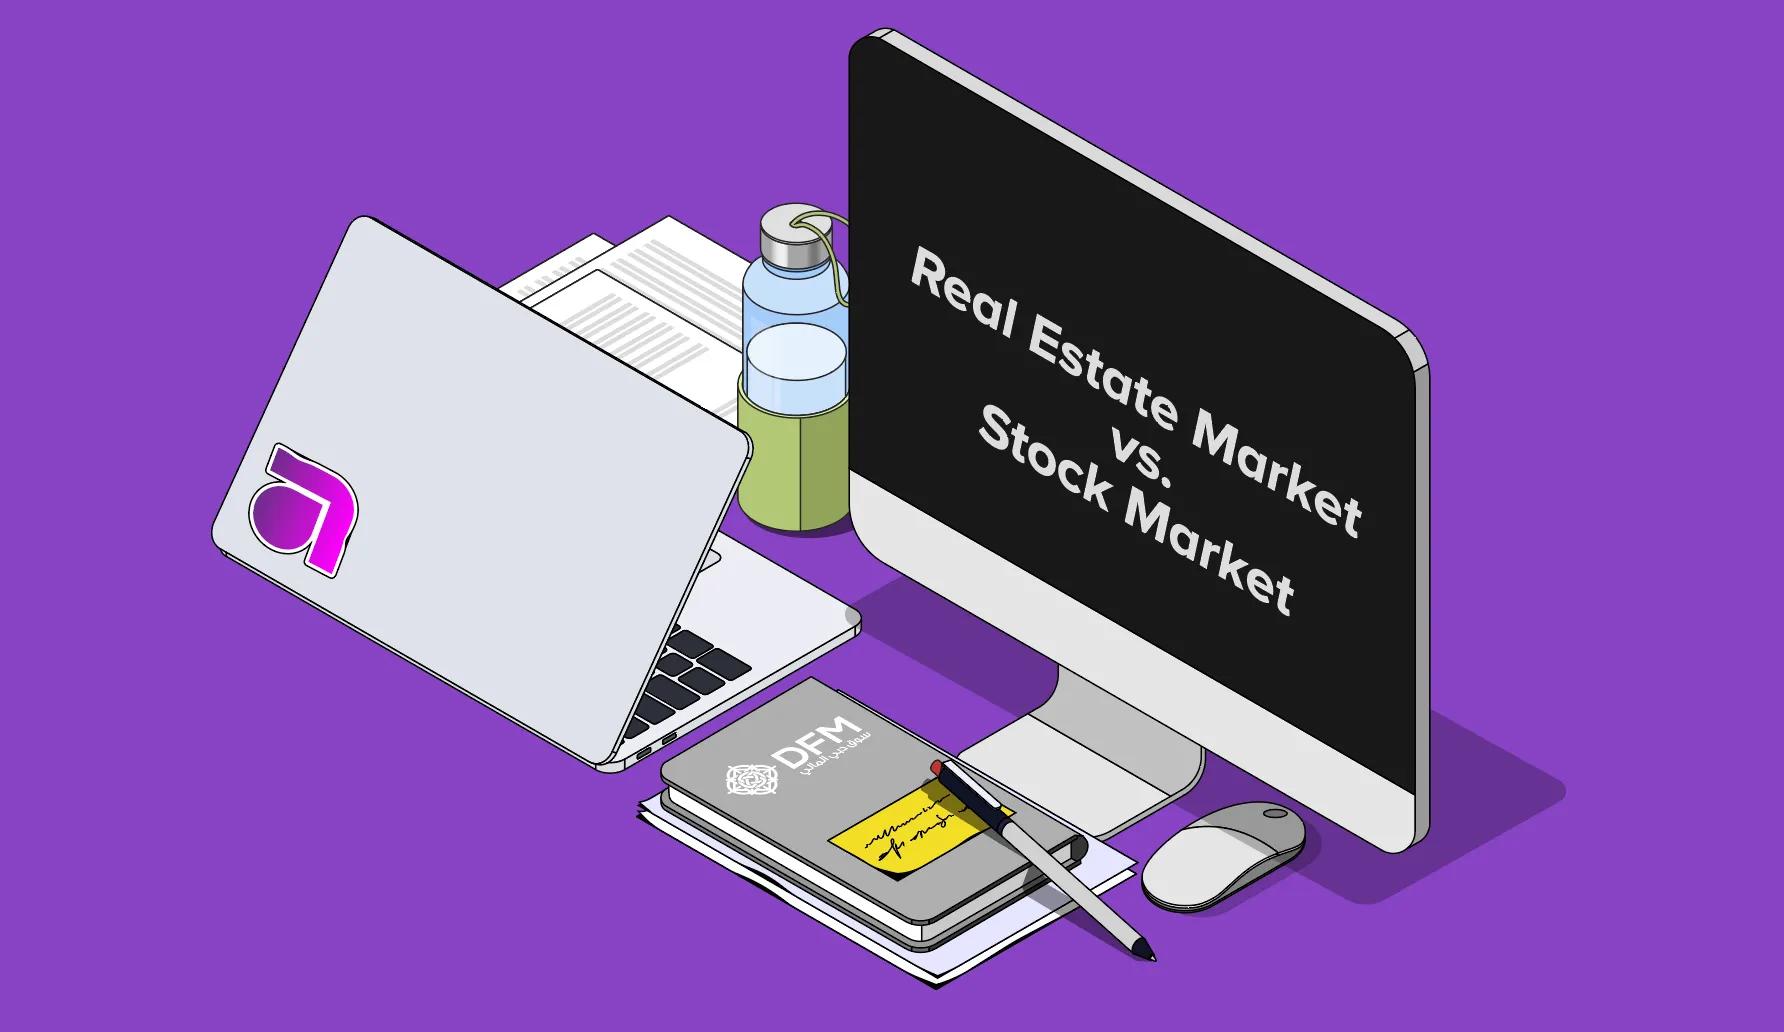 Dubai Real Estate Market vs. Dubai Stock Market: What You Should Know